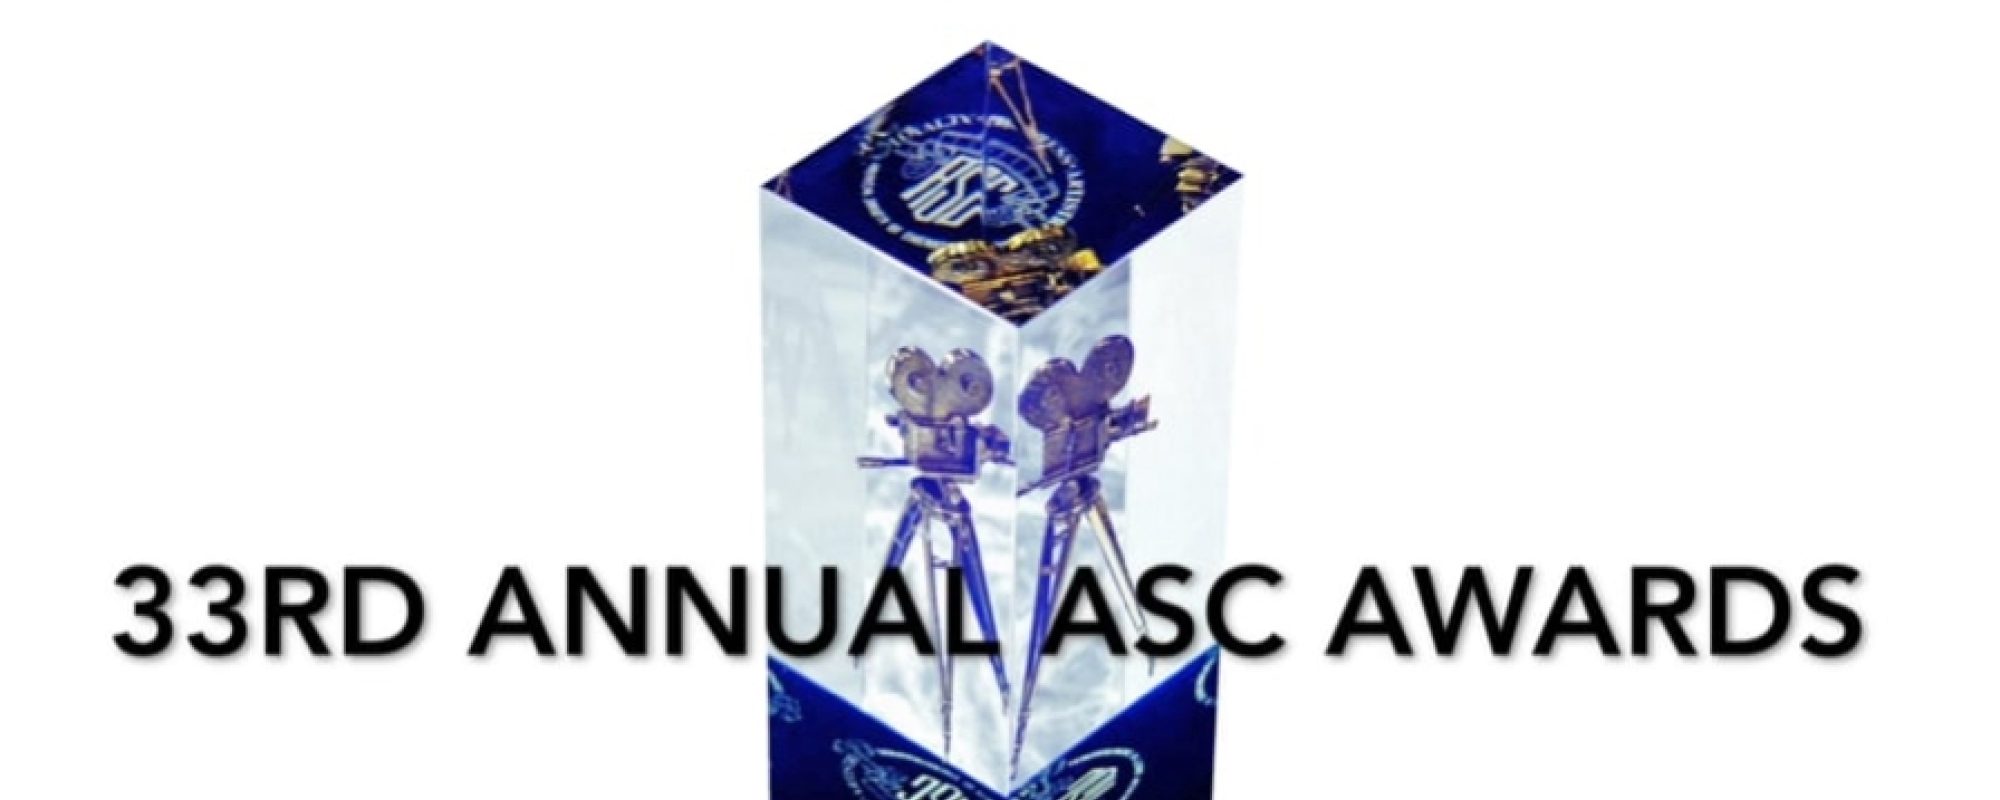 33rd Annual ASC Awards: Feb. 9, 2019